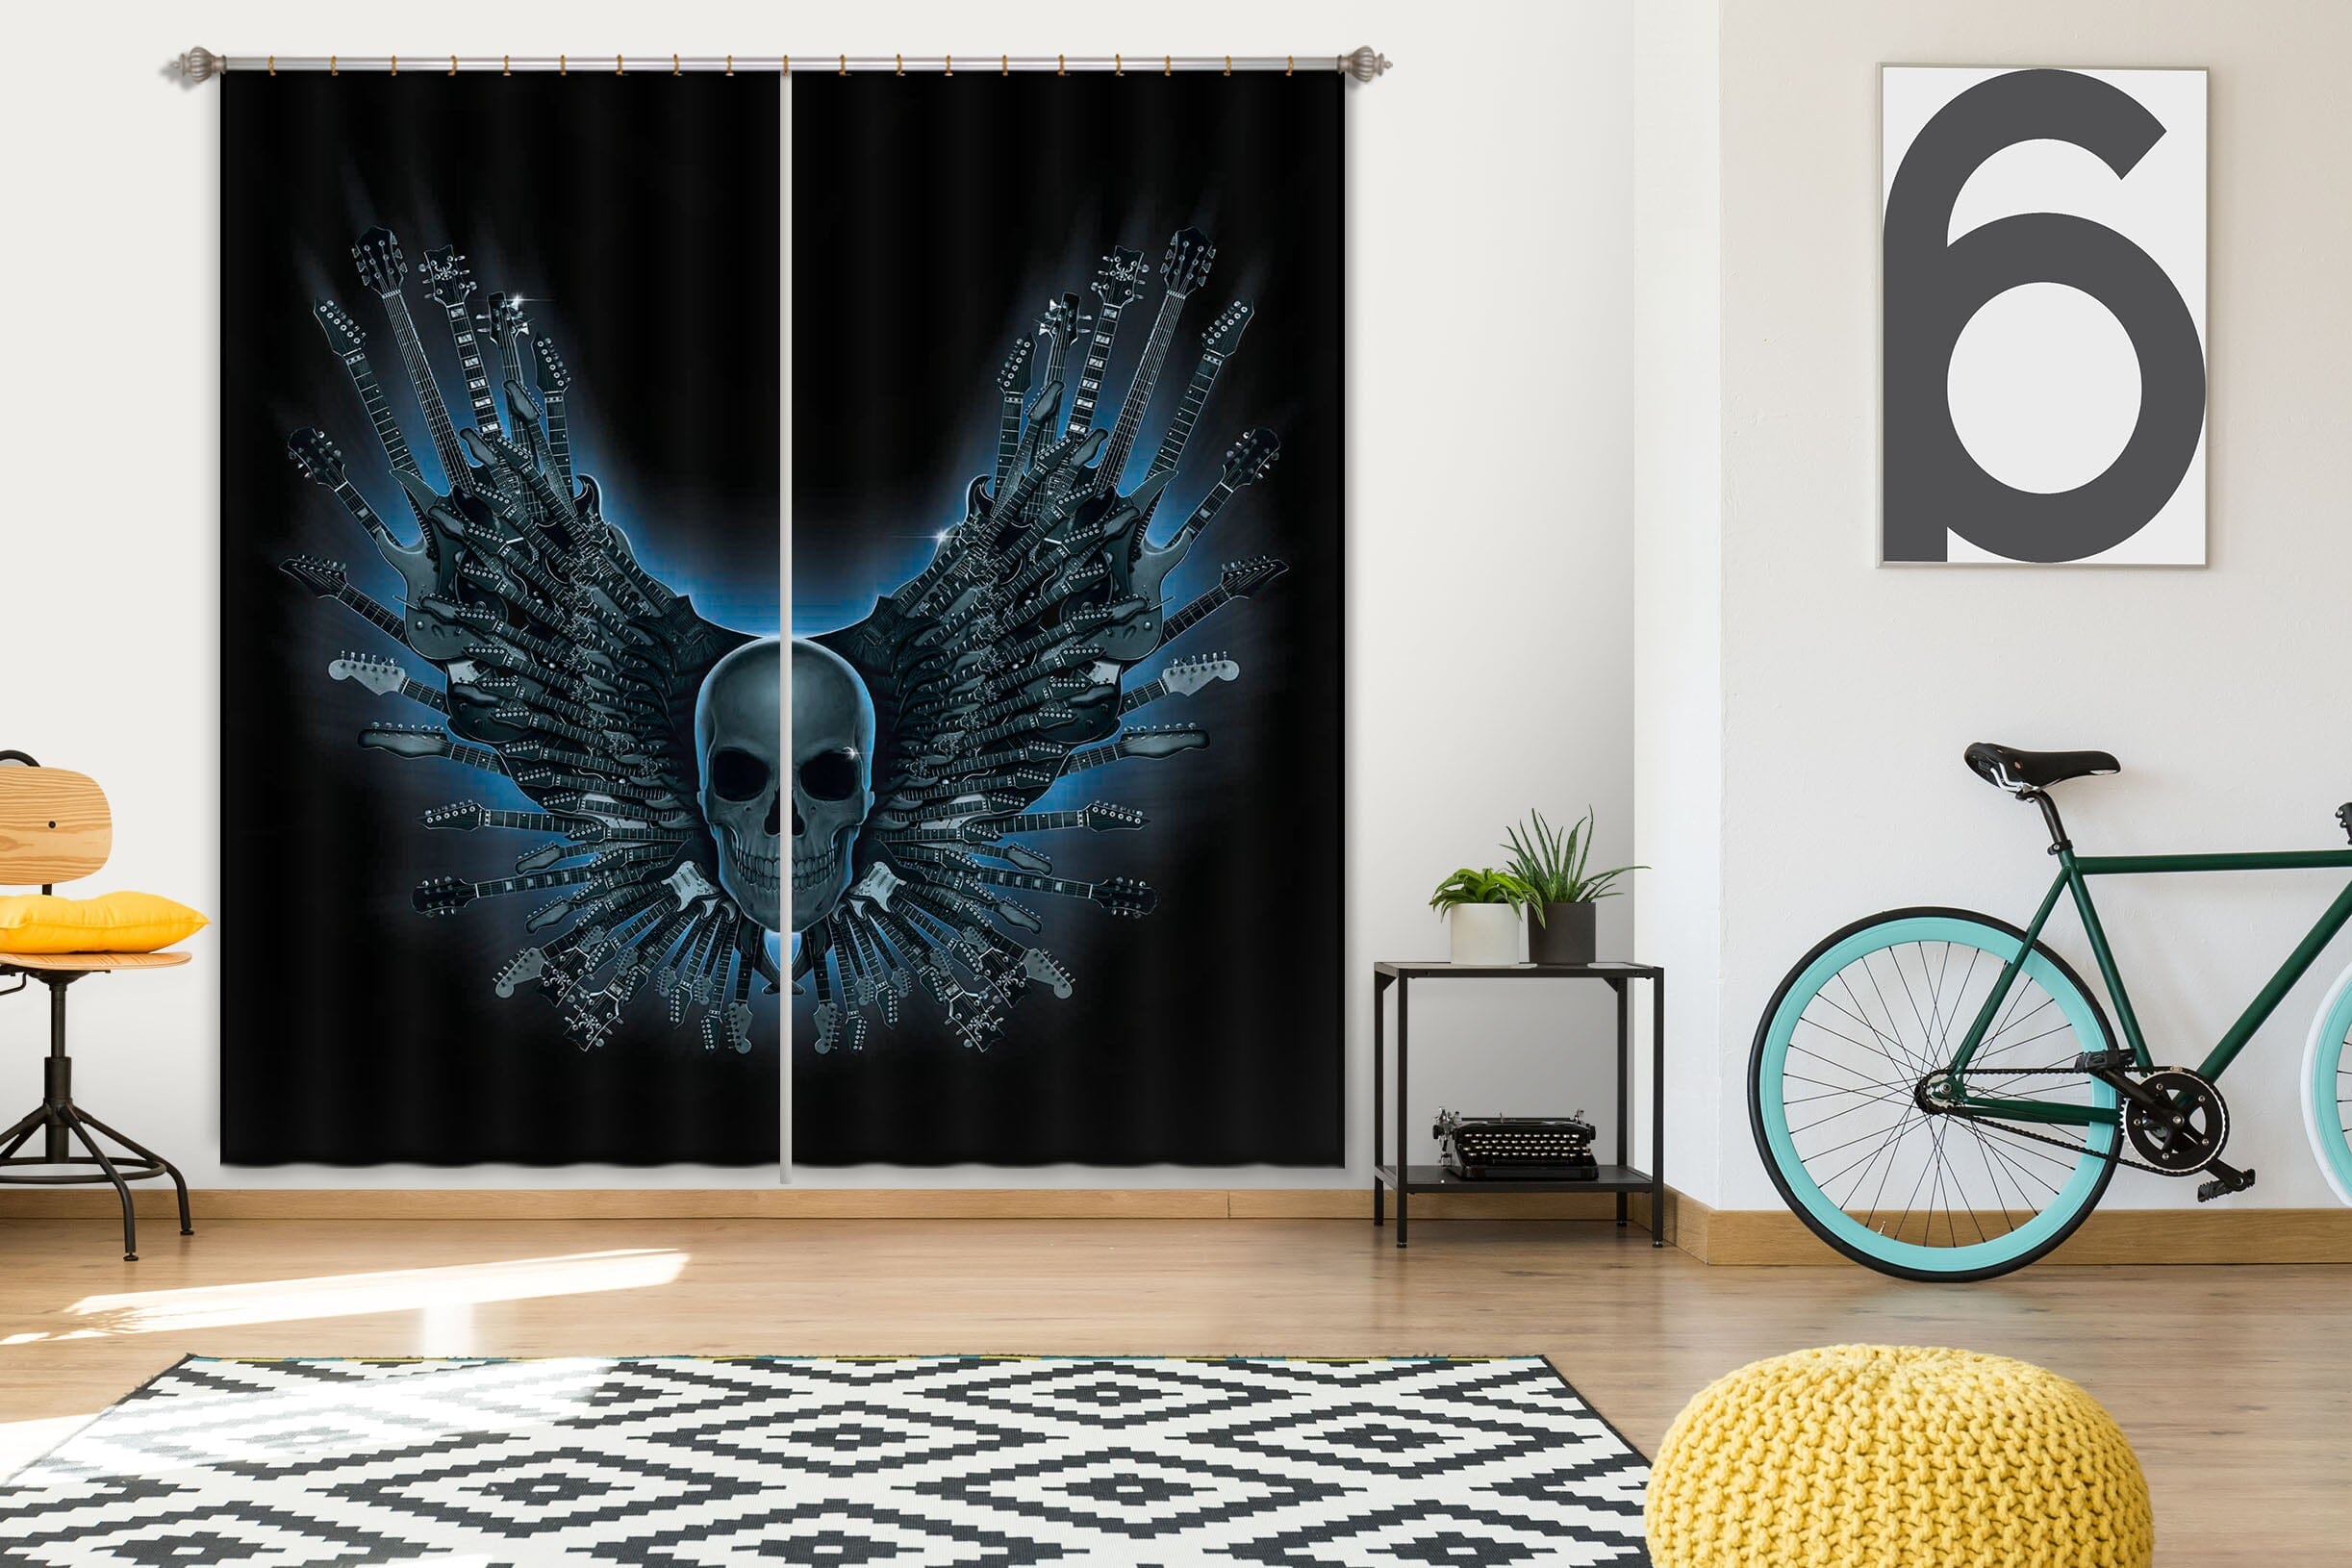 3D Skull Strings 073 Vincent Hie Curtain Curtains Drapes Curtains AJ Creativity Home 